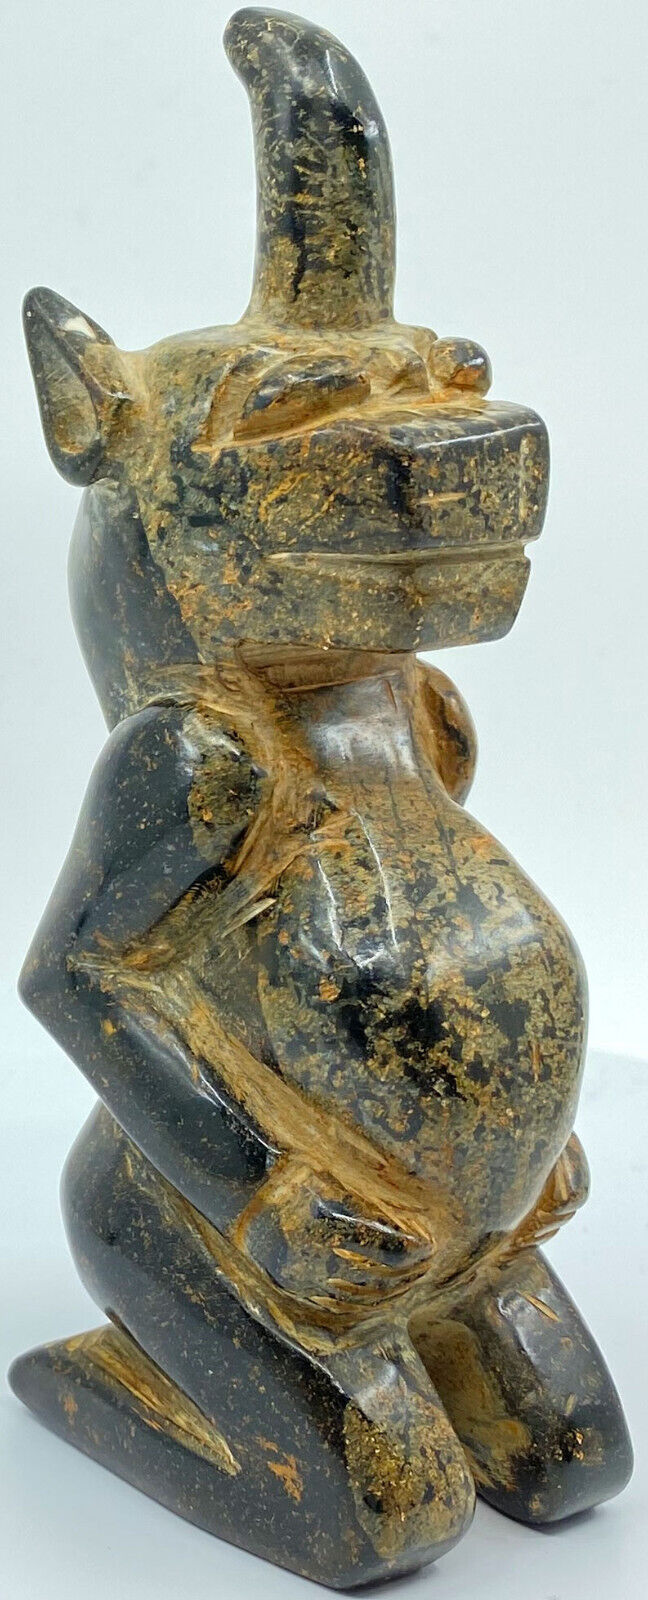 Ancient China Chinese HONGSHAN Culture JADE ANIMAL Figurine 4700-2900BC i119433